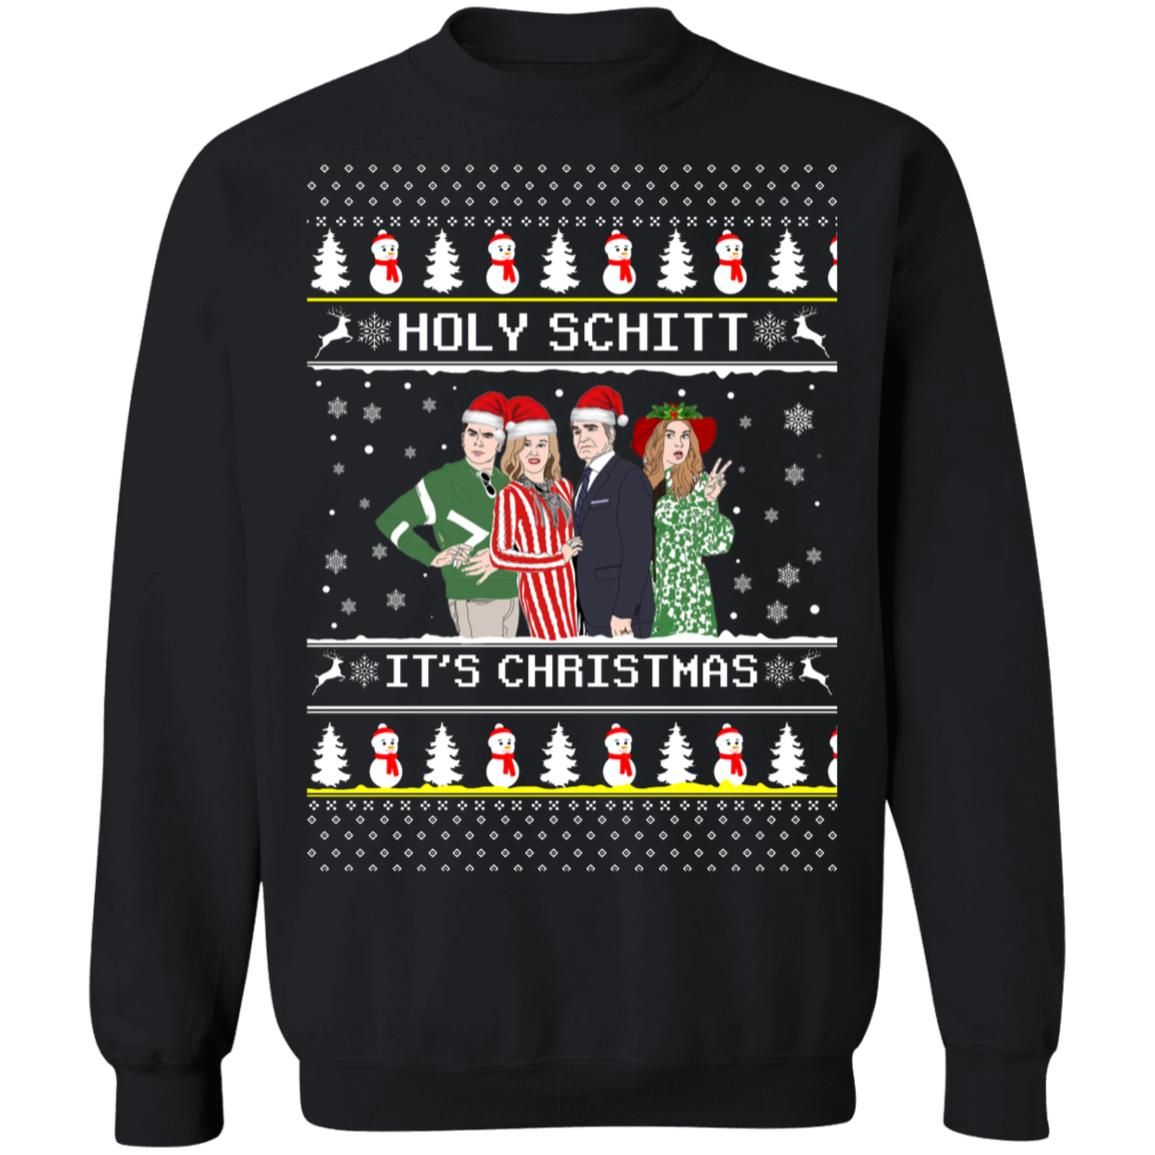 Holy Schitt It’s Christmas Shirt Style: Sweatshirt, Color: Black